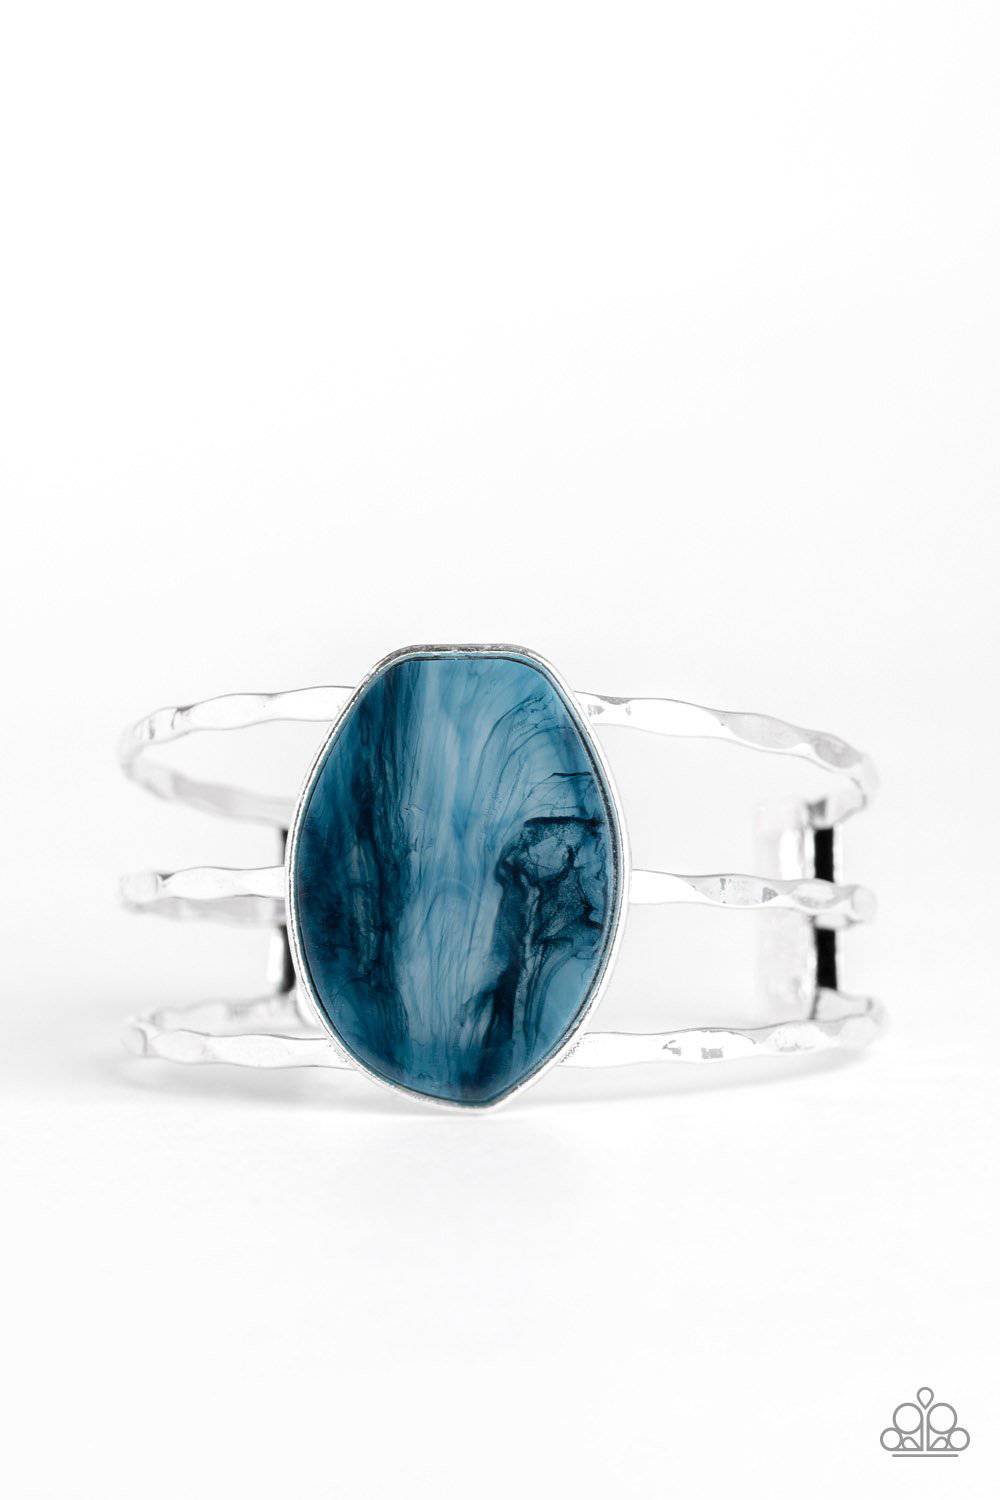 Canyon Dream - Blue Marble Cuff Bracelet - Paparazzi Accessories - GlaMarous Titi Jewels